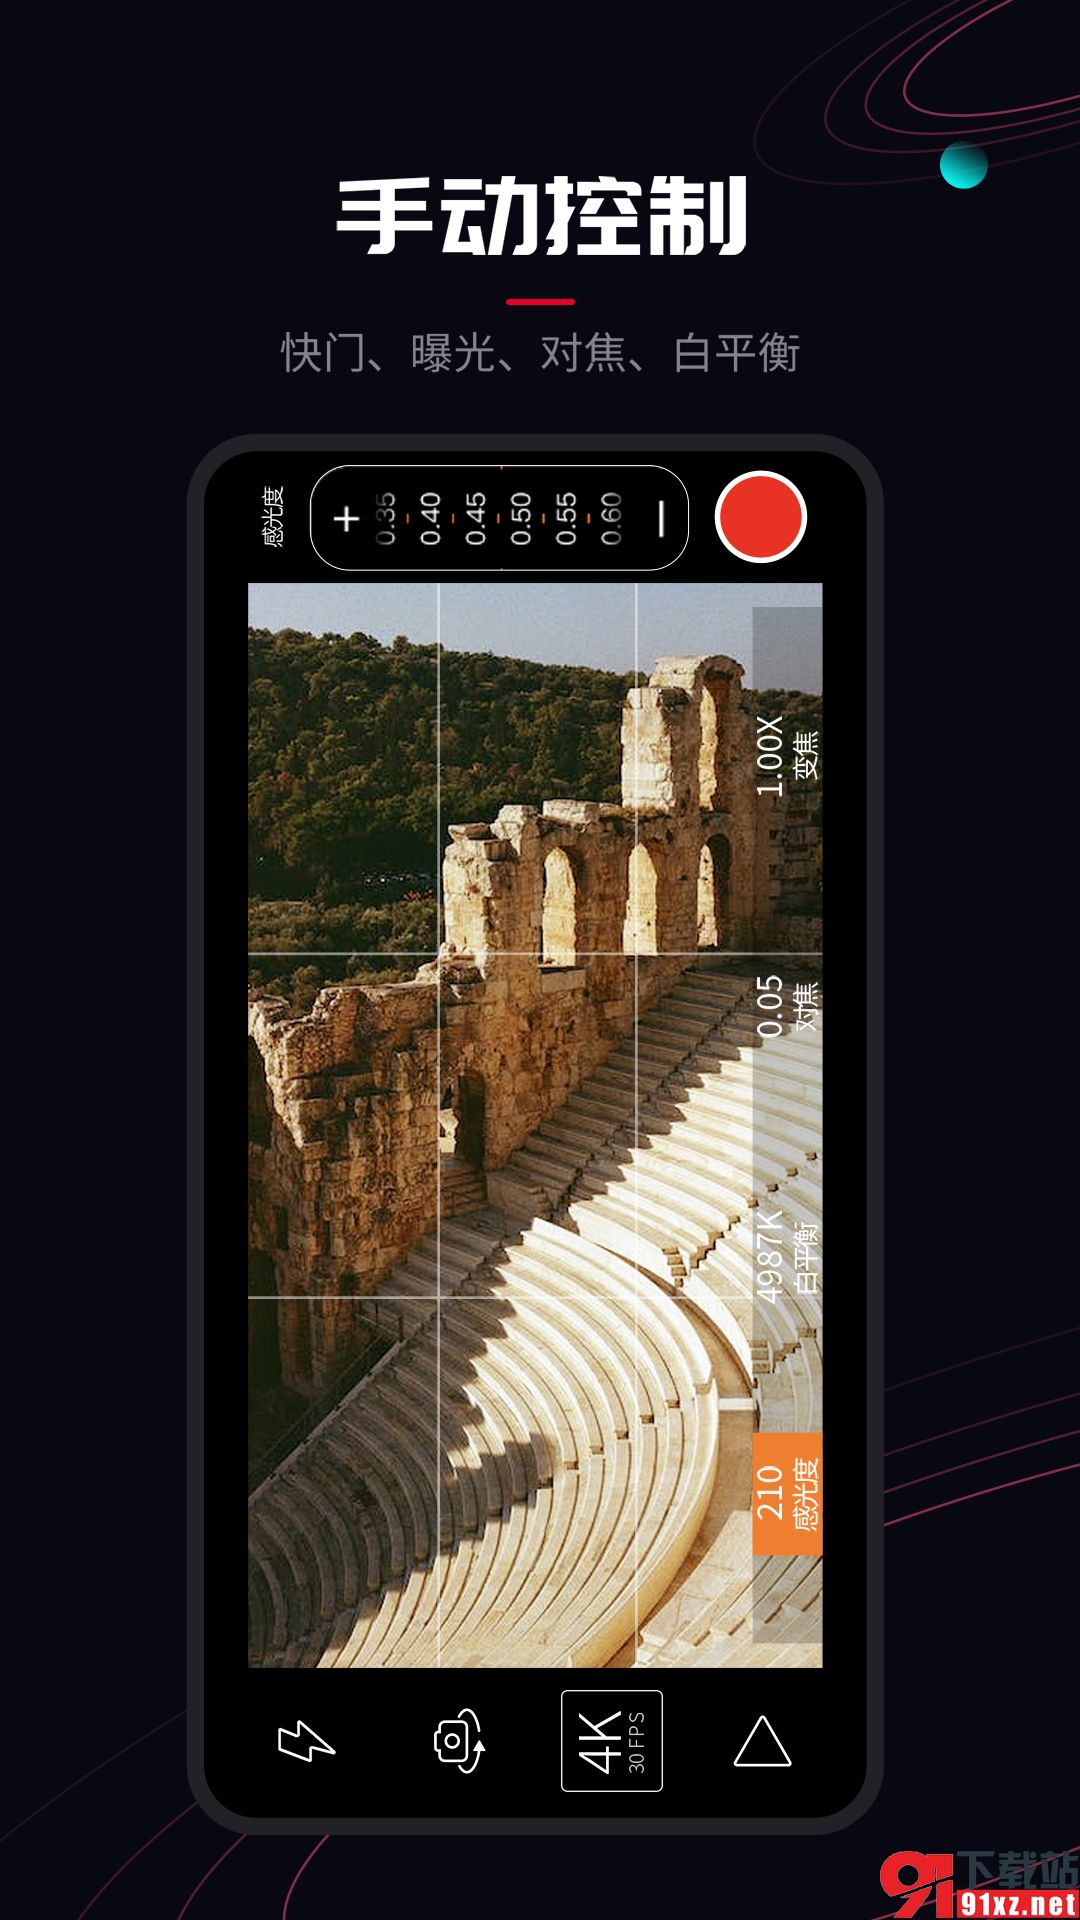 ProMovie专业摄像机app安卓版v1.5.7截图2